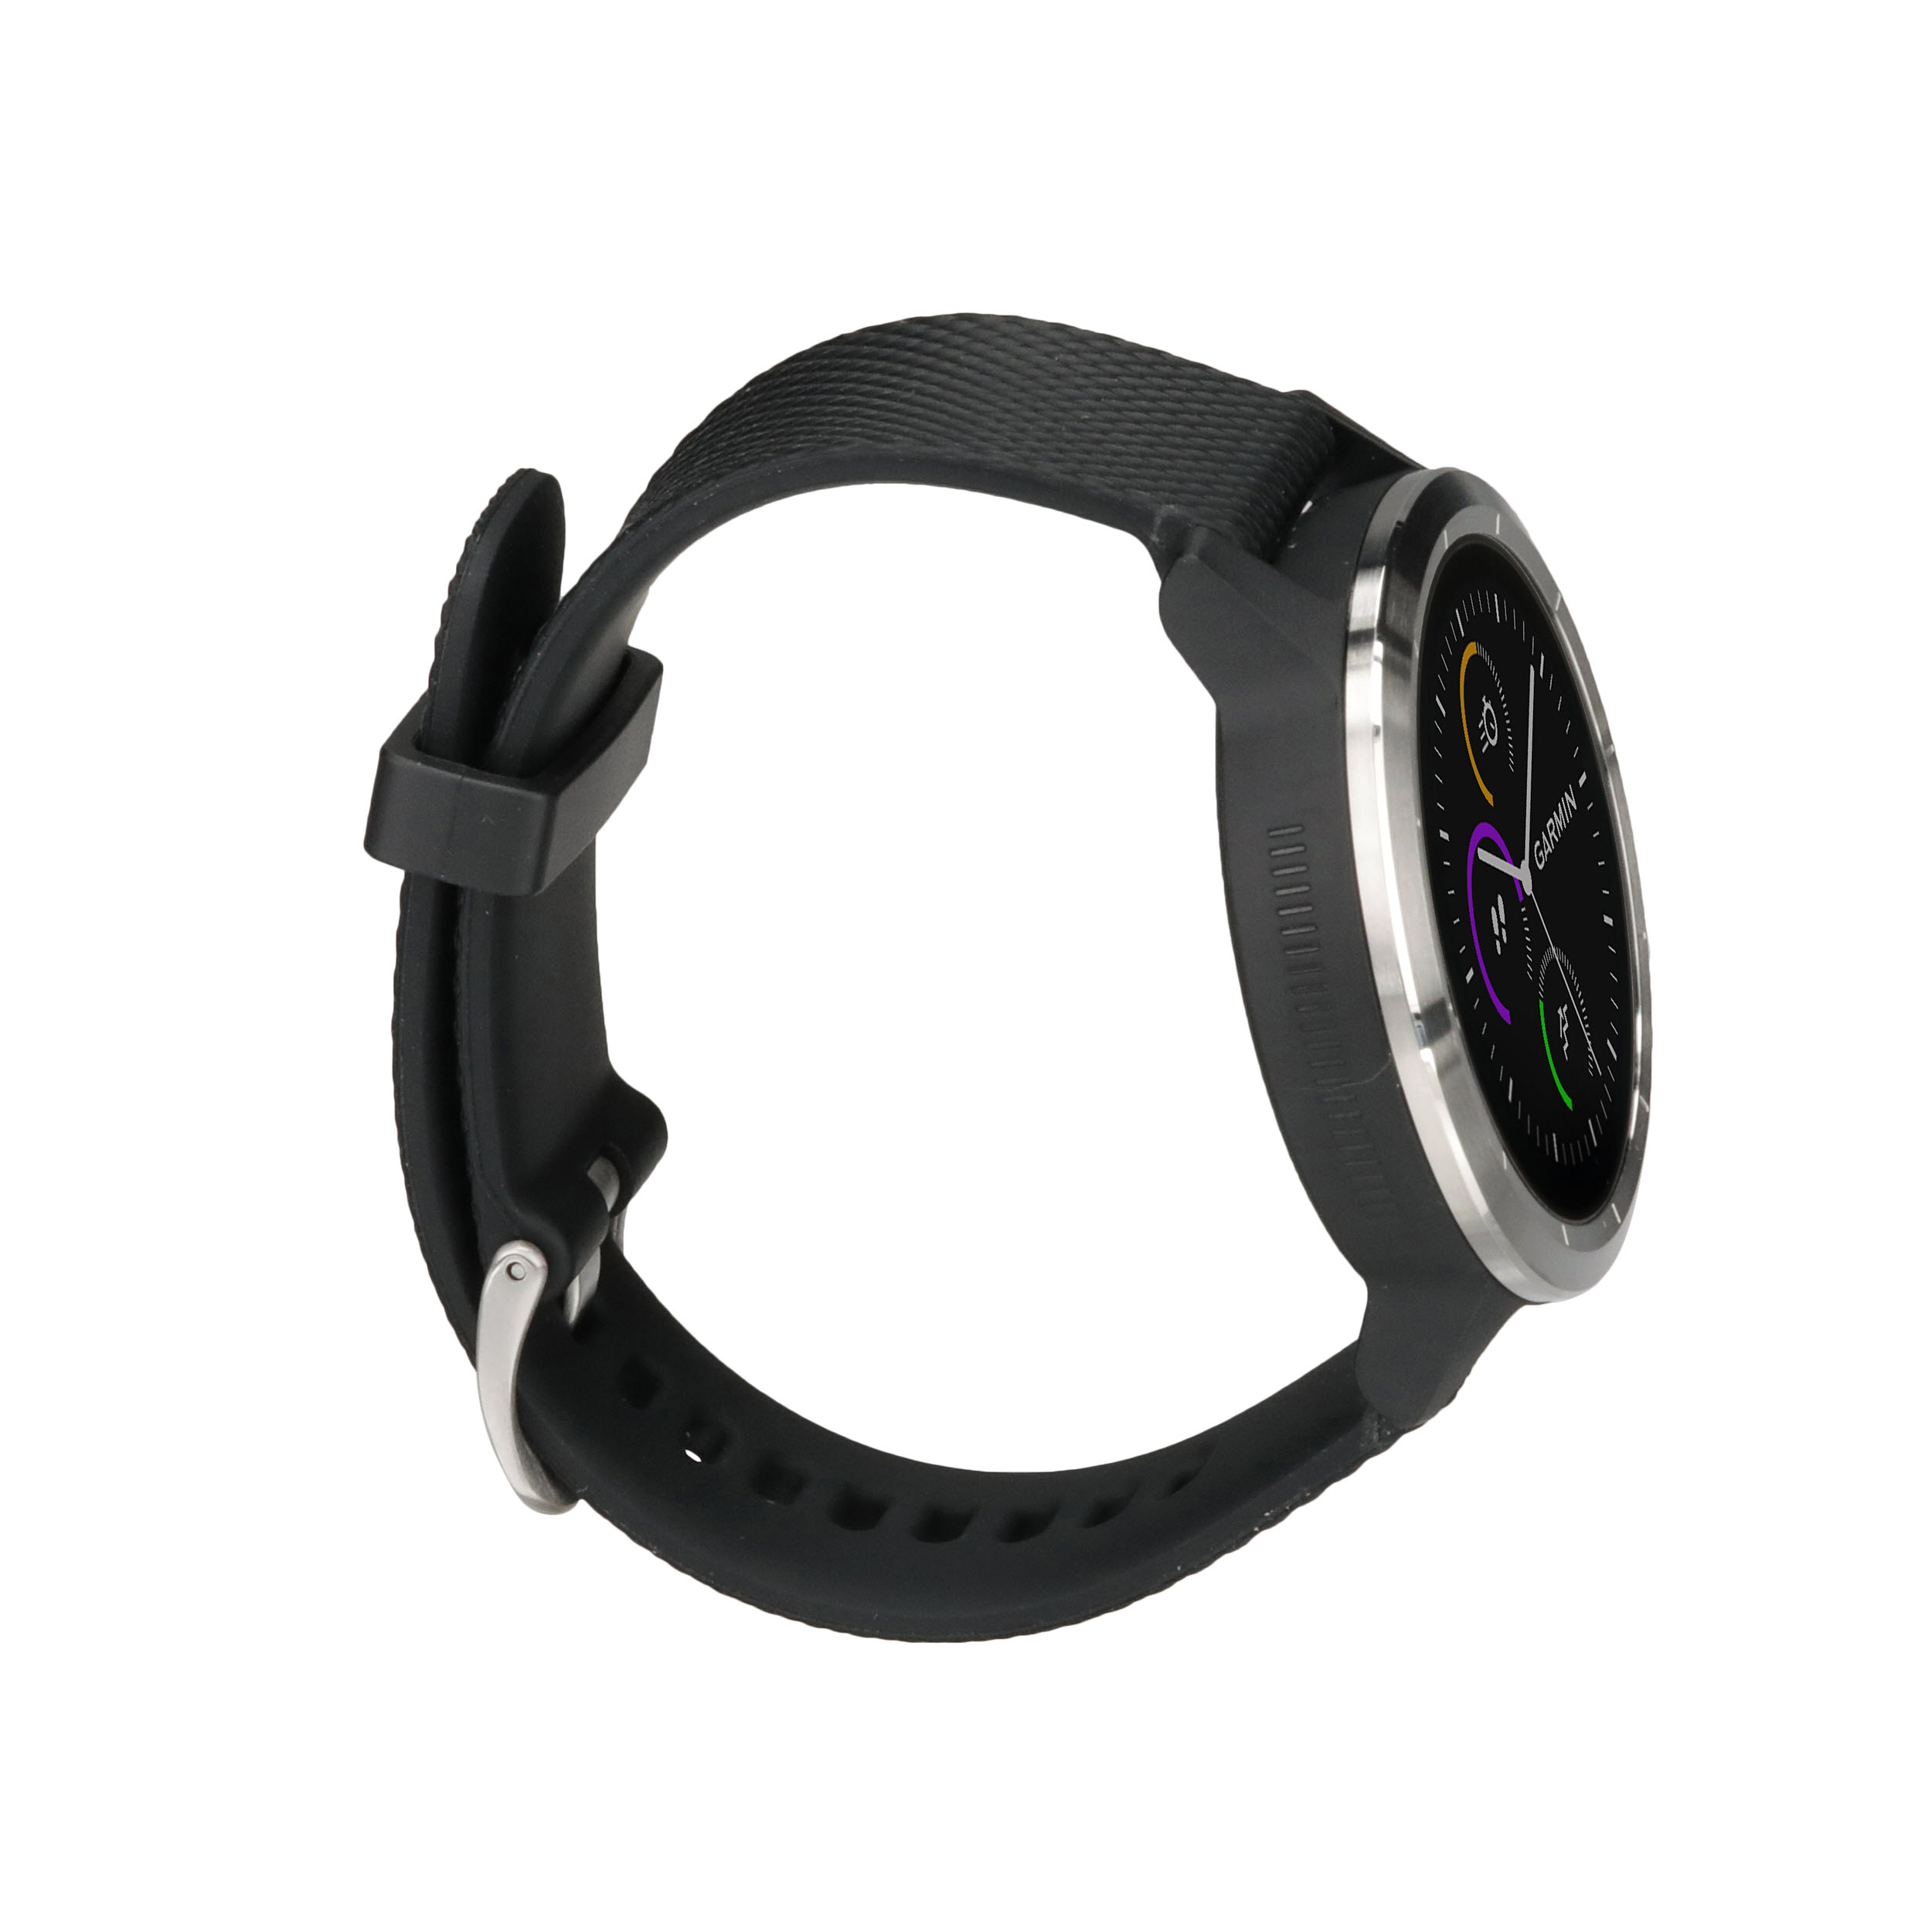 Garmin Vivoactive 3 GPS Smartwatch with Built-in Sports Apps - Black/Silver